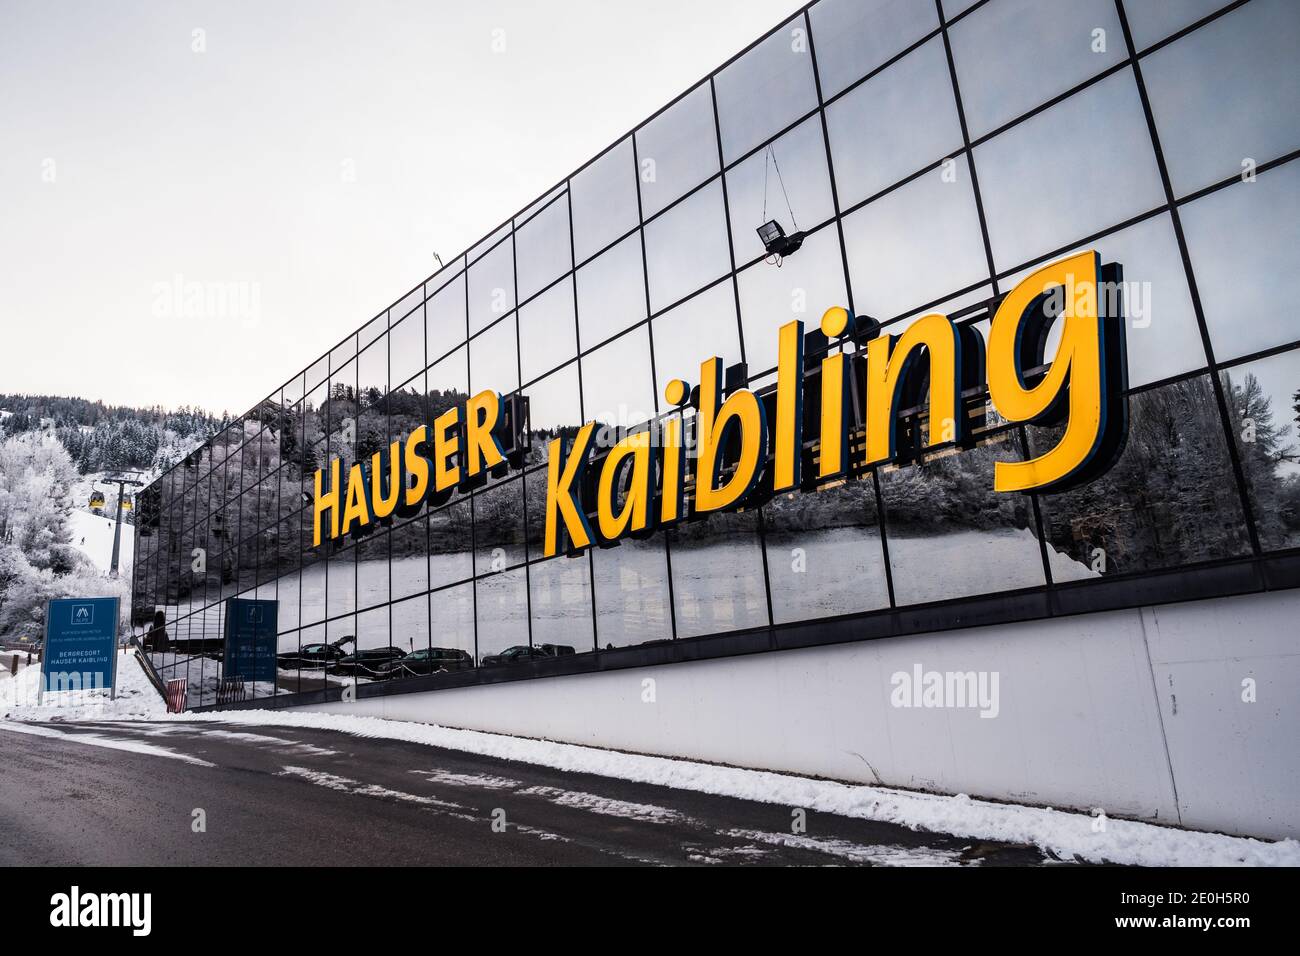 Haus im Ennstal, Austria - December 29 2020: Hauser Kaibling Gondola Lift Station Building Facade with Sign in Winter. Stock Photo